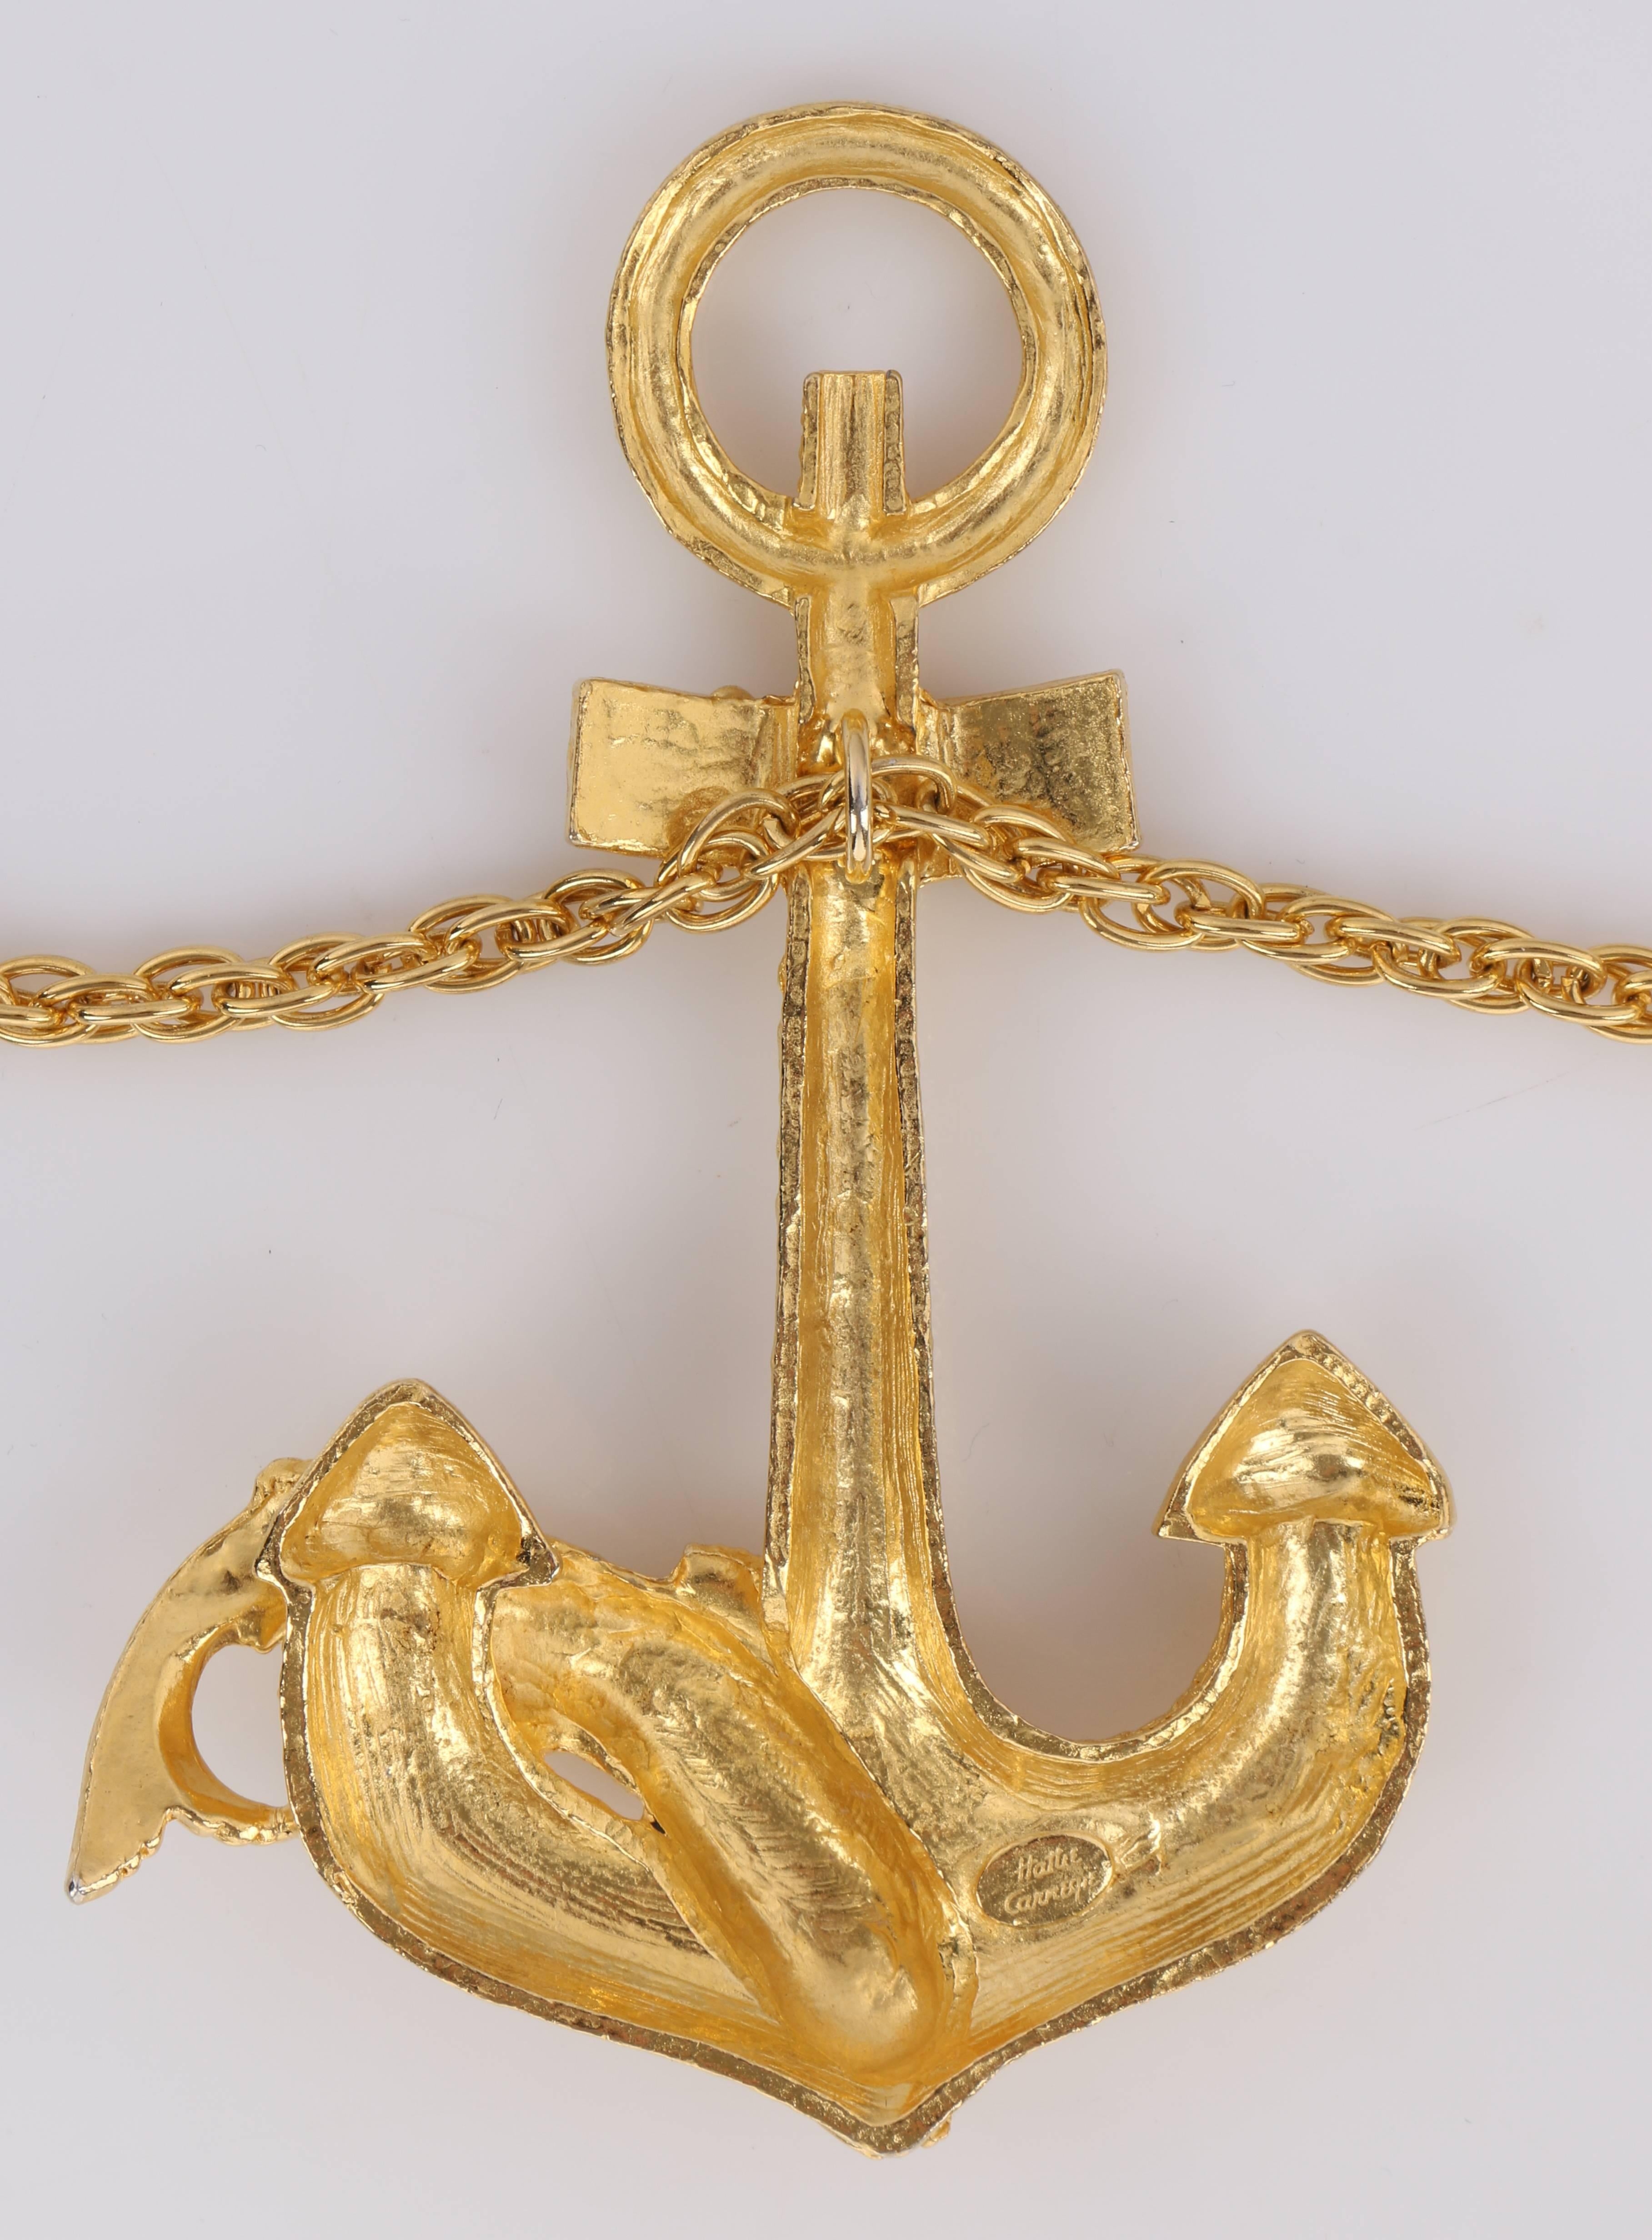 Women's HATTIE CARNEGIE c.1970's Large Gold Fish & Anchor Pendant Statement Necklace